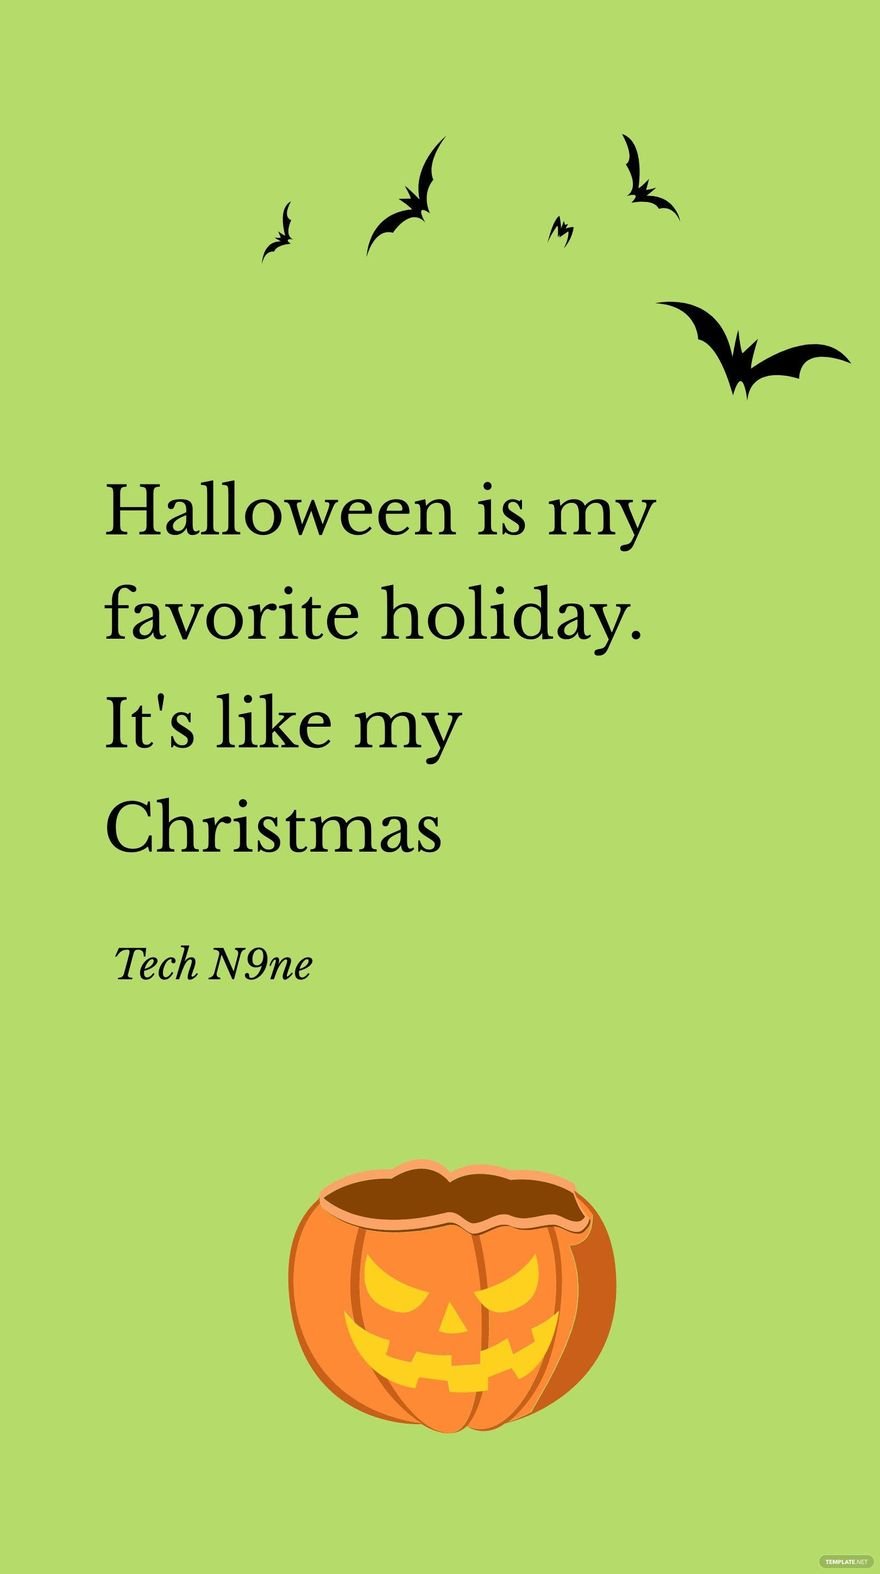 Tech N9ne- Halloween is my favorite holiday. It's like my Christmas.